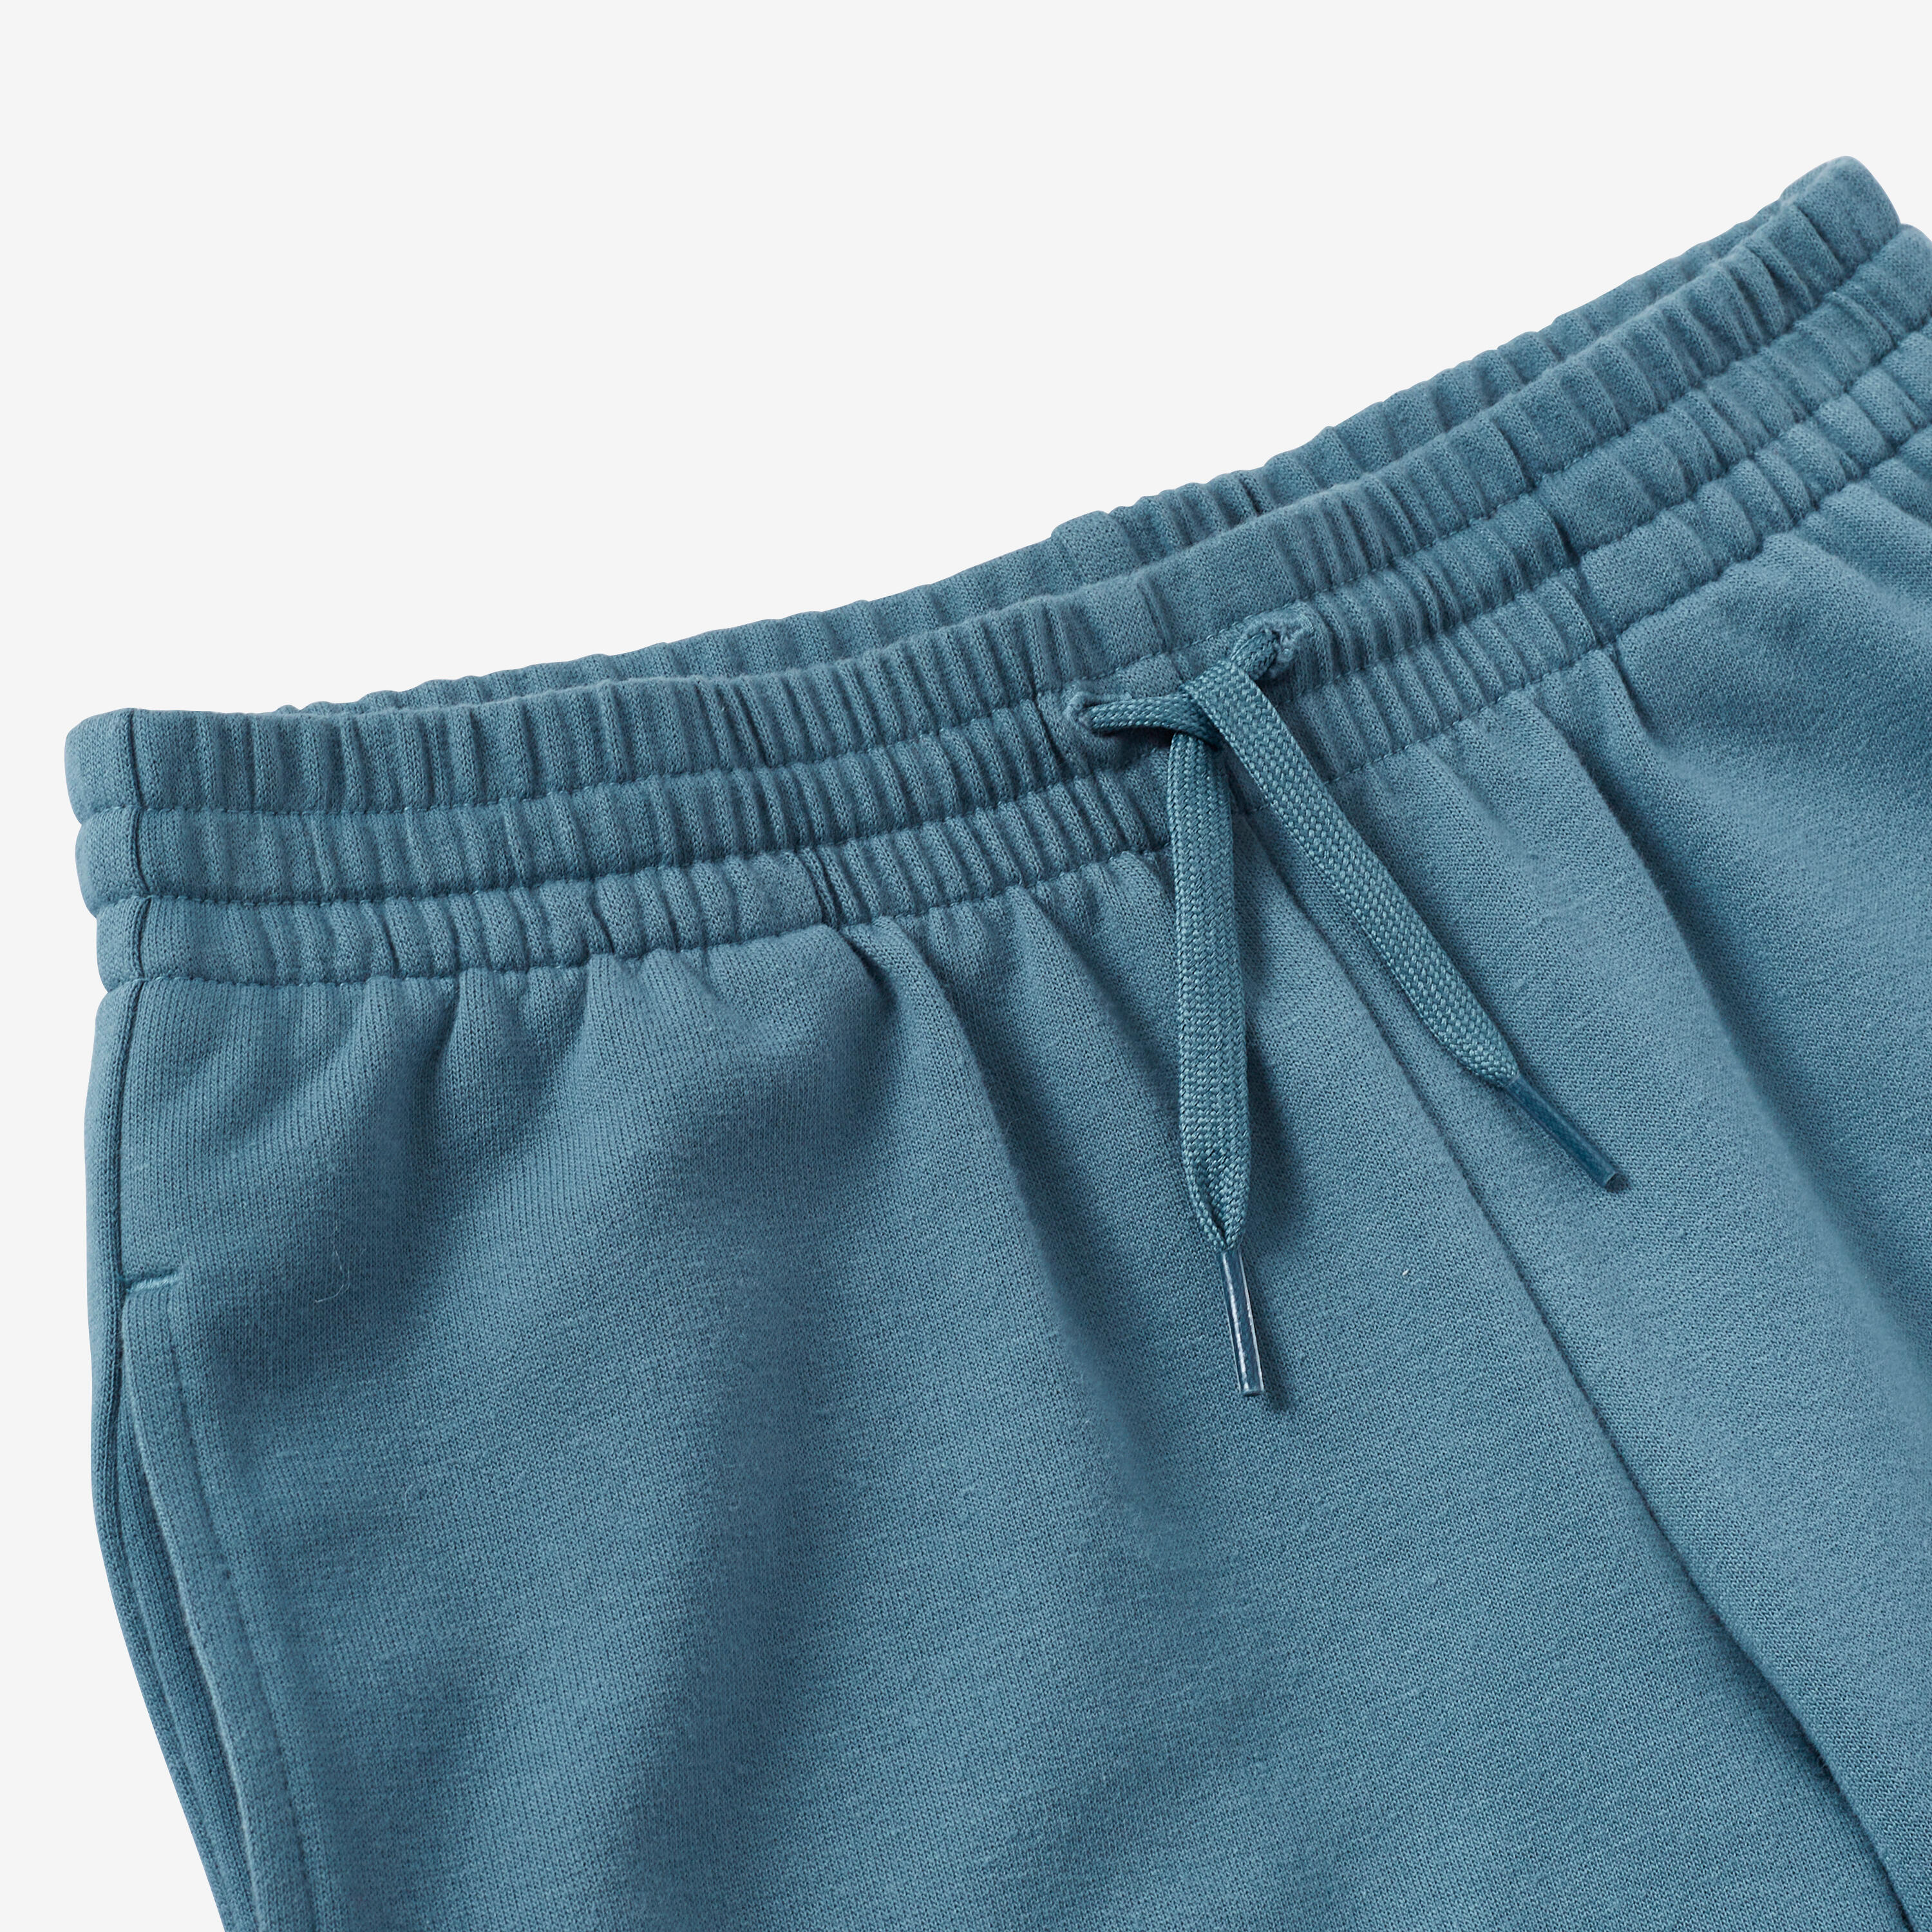 Kids' Unisex Cotton Shorts - Green 4/5